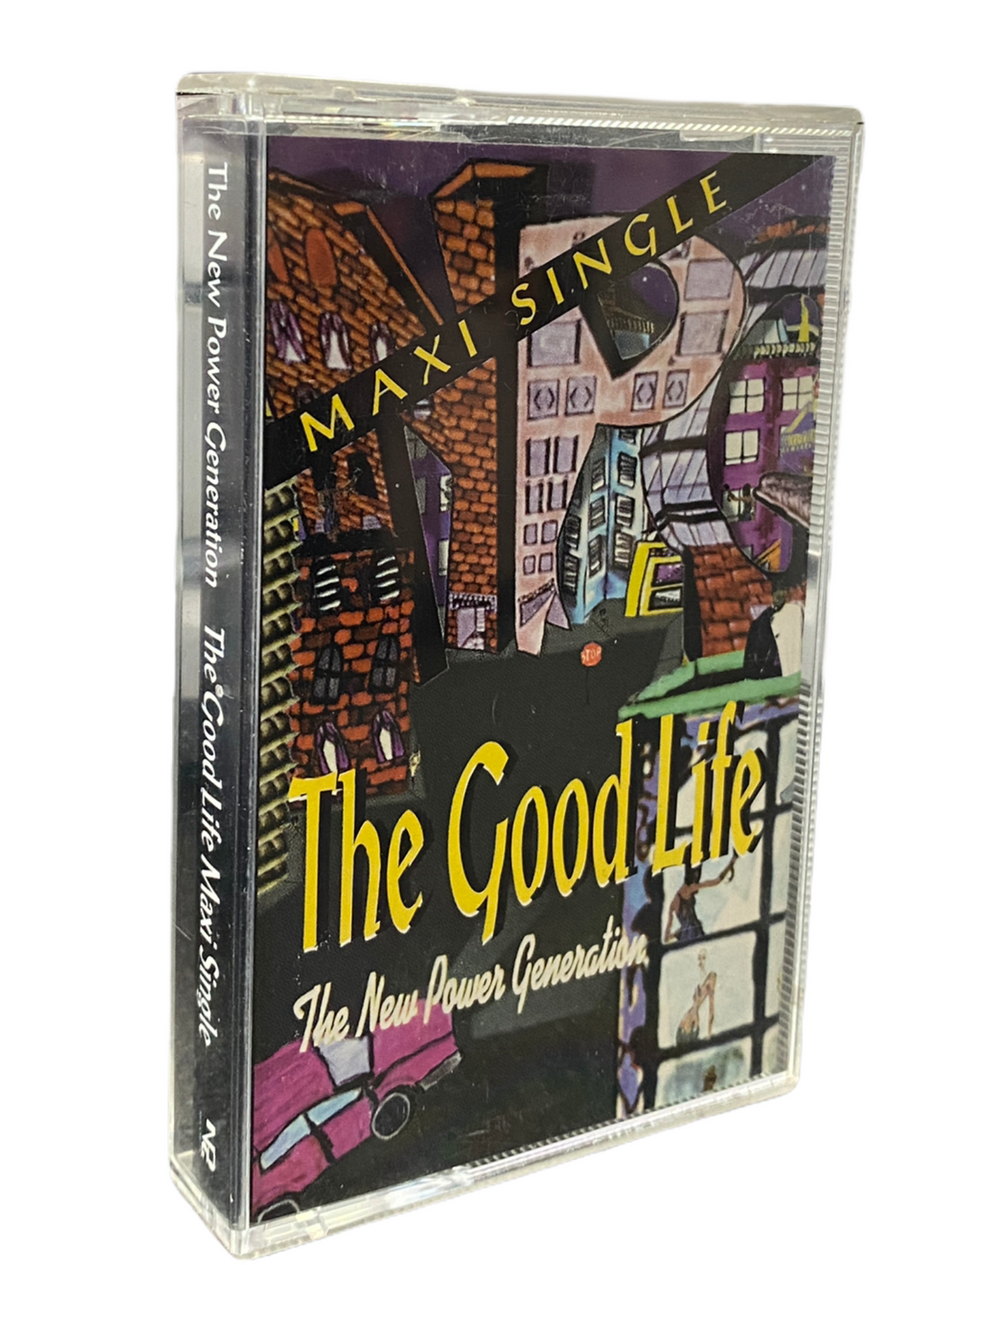 Prince – The NPG Prince The Good Life Original Tape Cassette Single Release